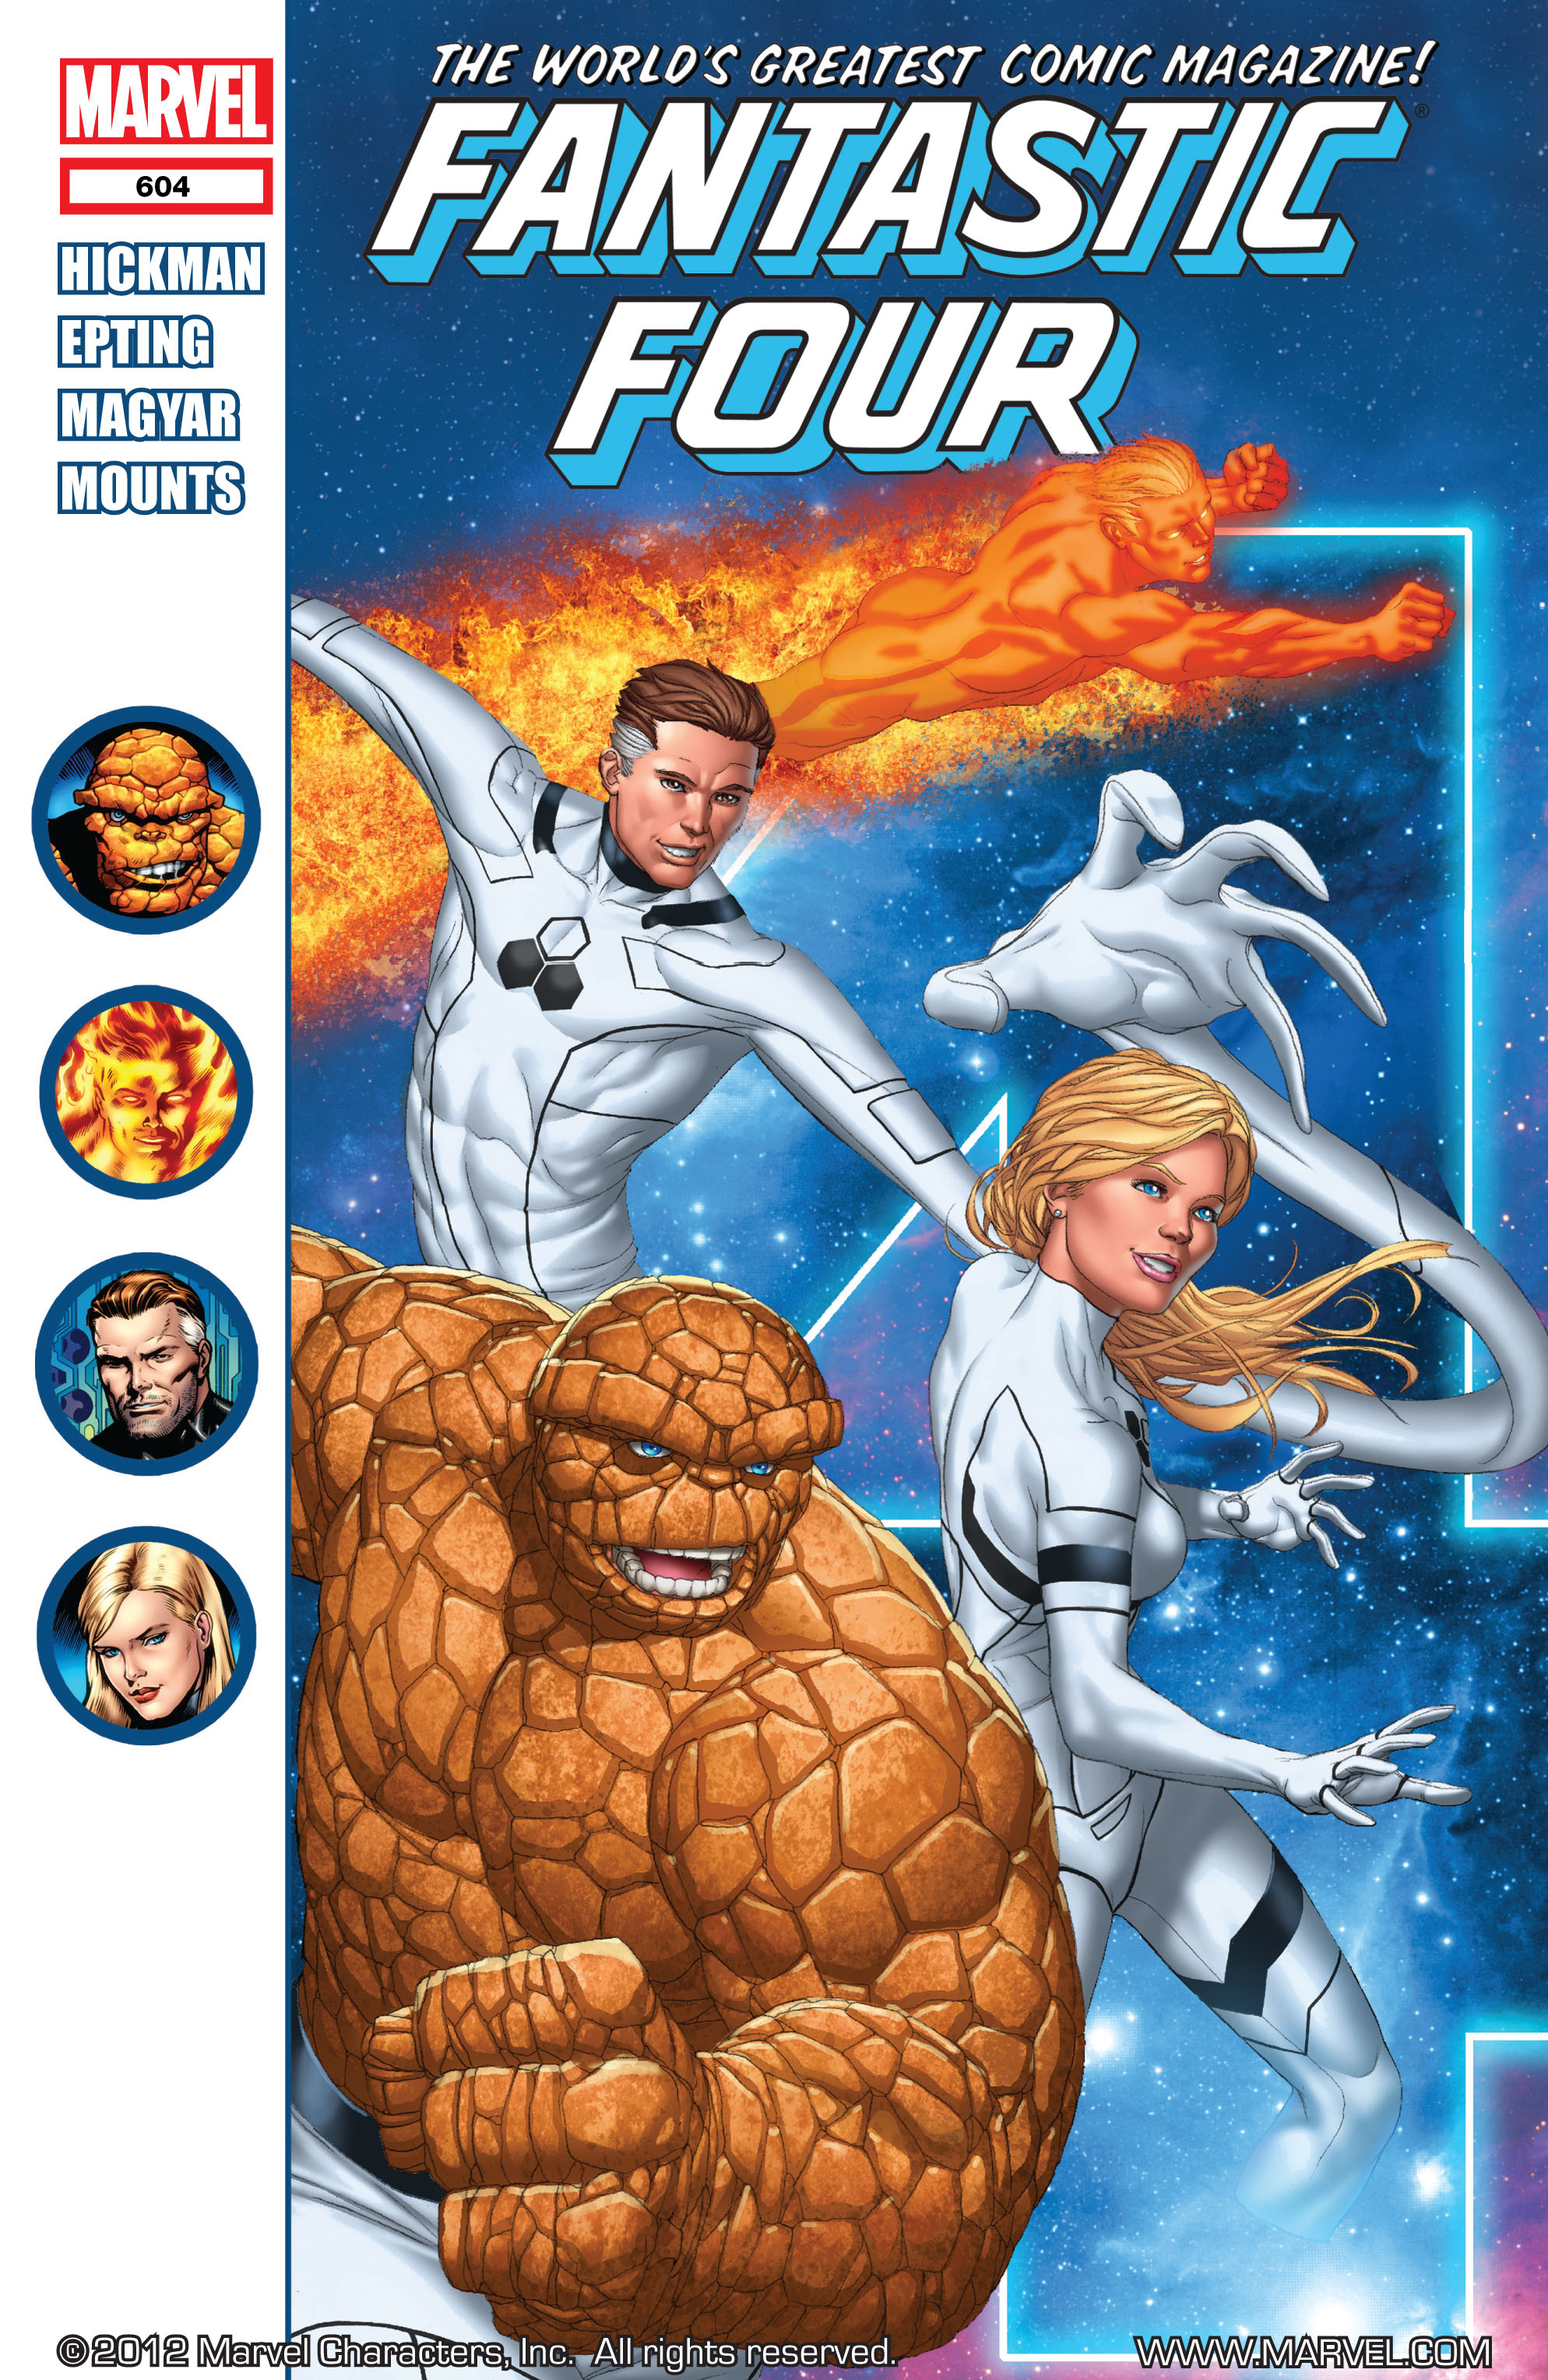 Журнал фантастики 4. Фантастическая четверка Марвел комикс. Fantastic four Vol 1. Фантастическая четверка картинки.